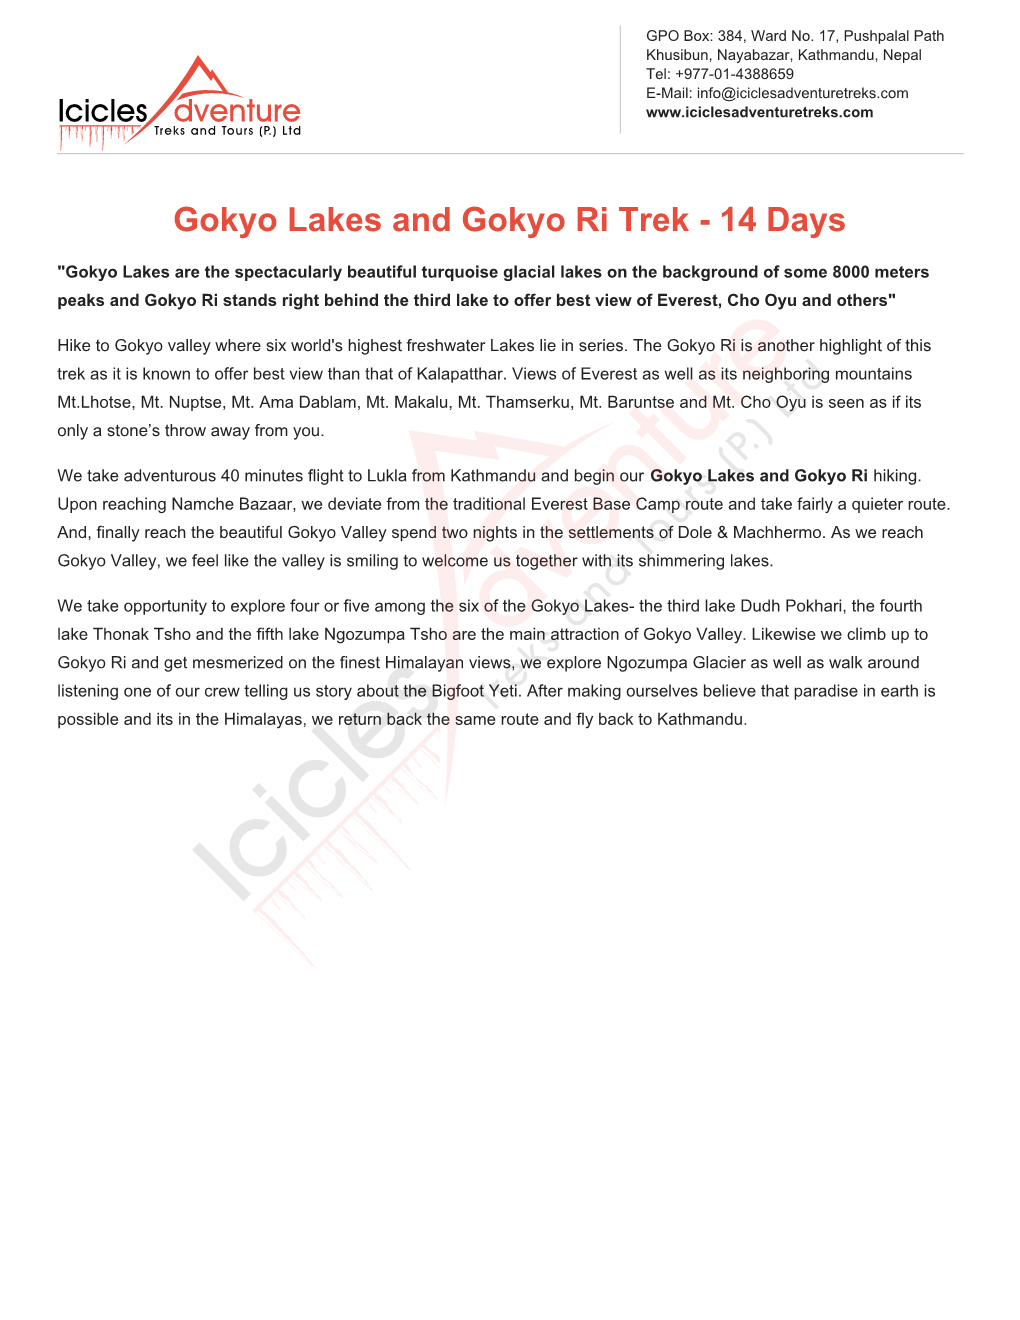 Gokyo Lakes and Gokyo Ri Trek - 14 Days